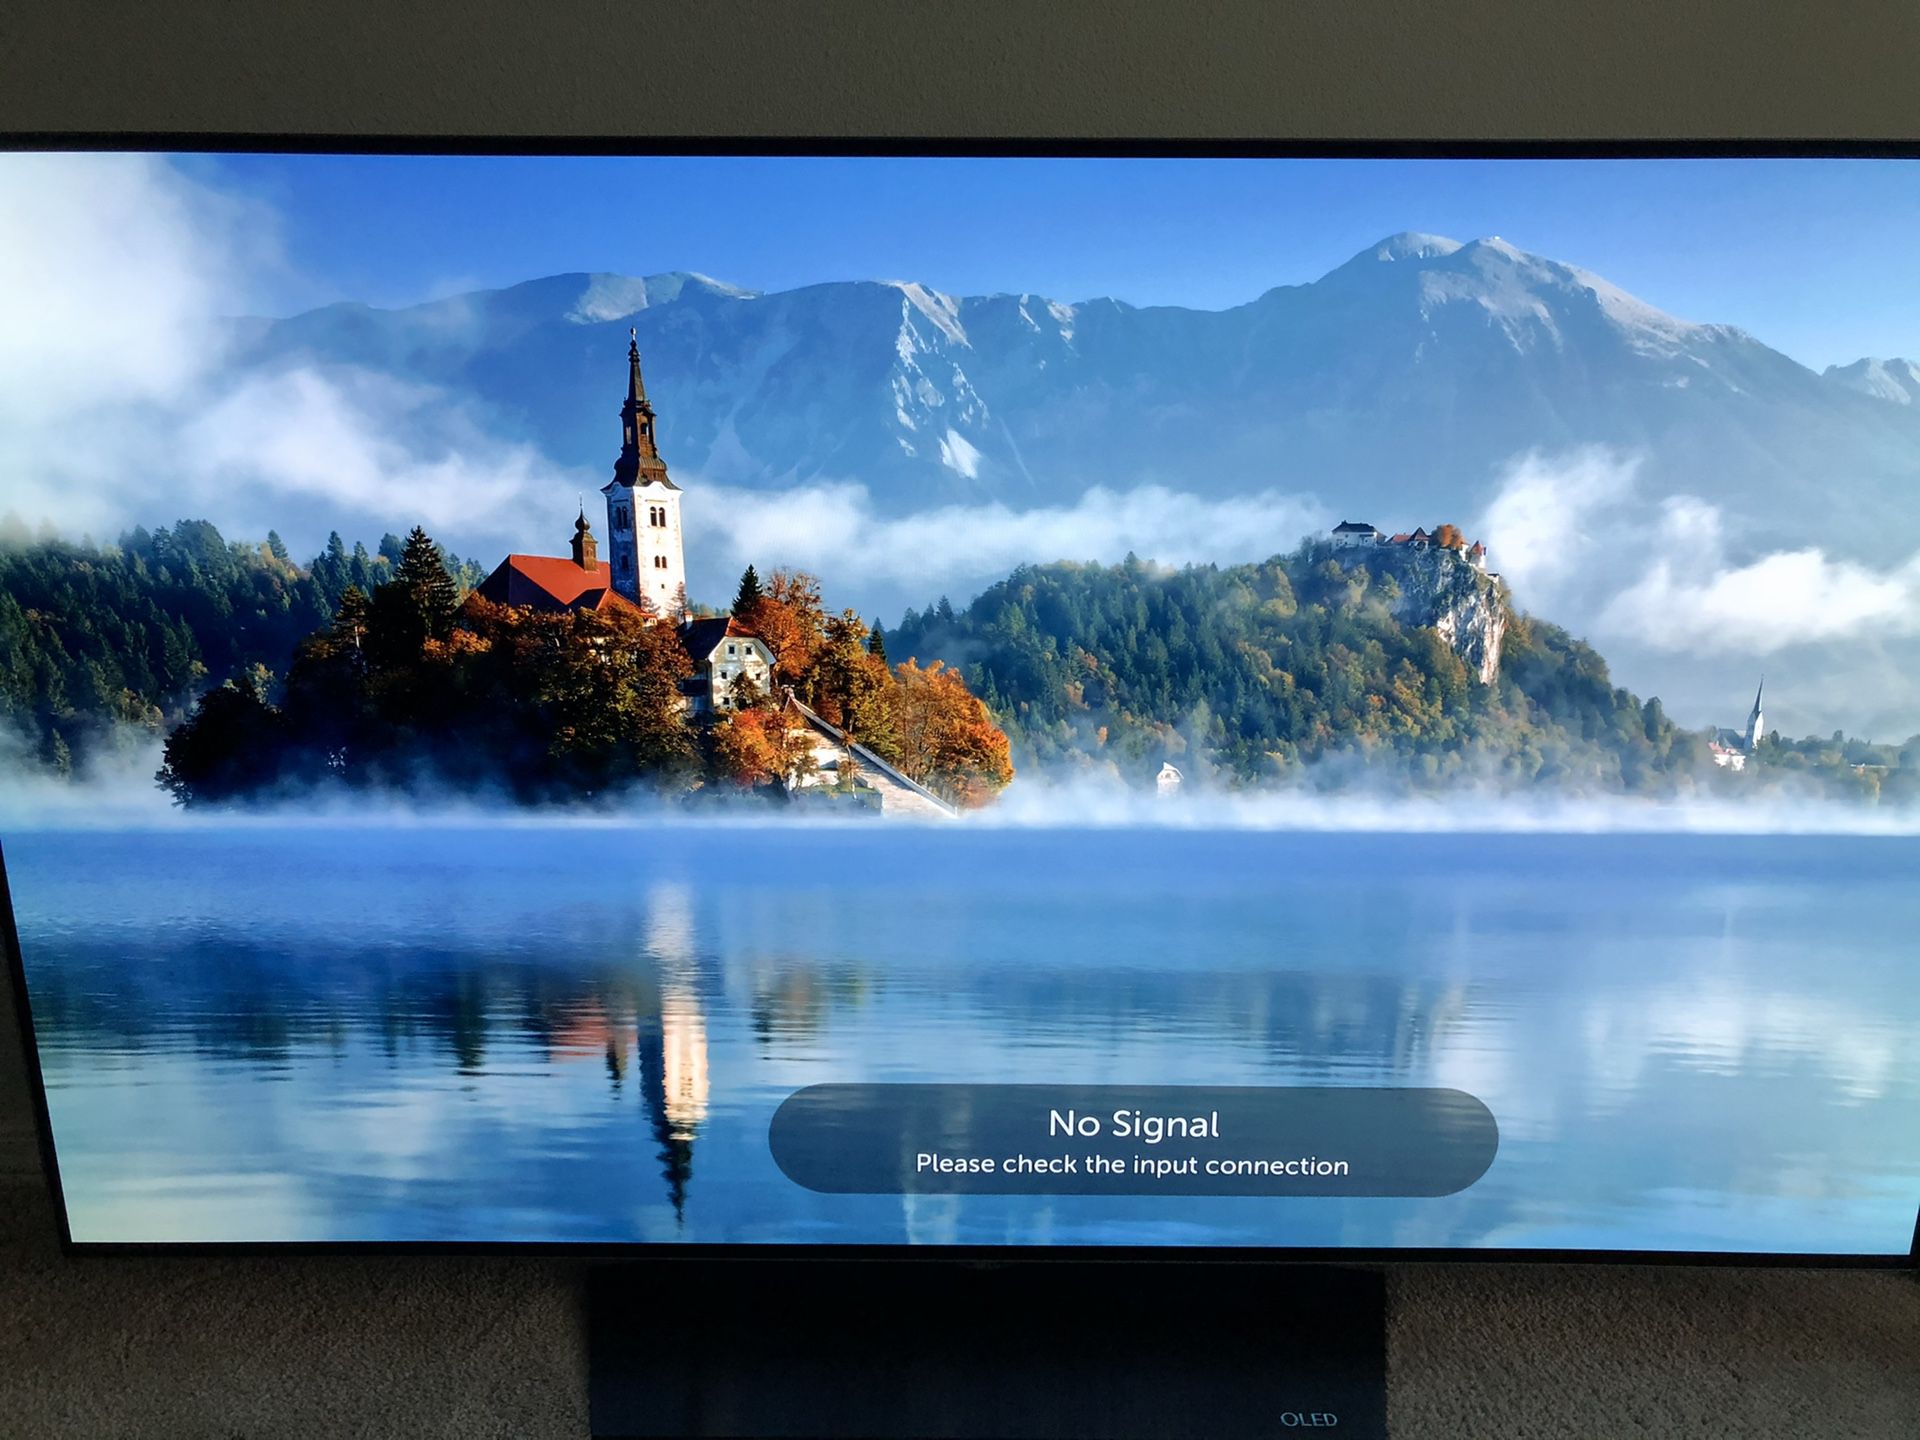 LG OLED 55 inch 4K HDR TV